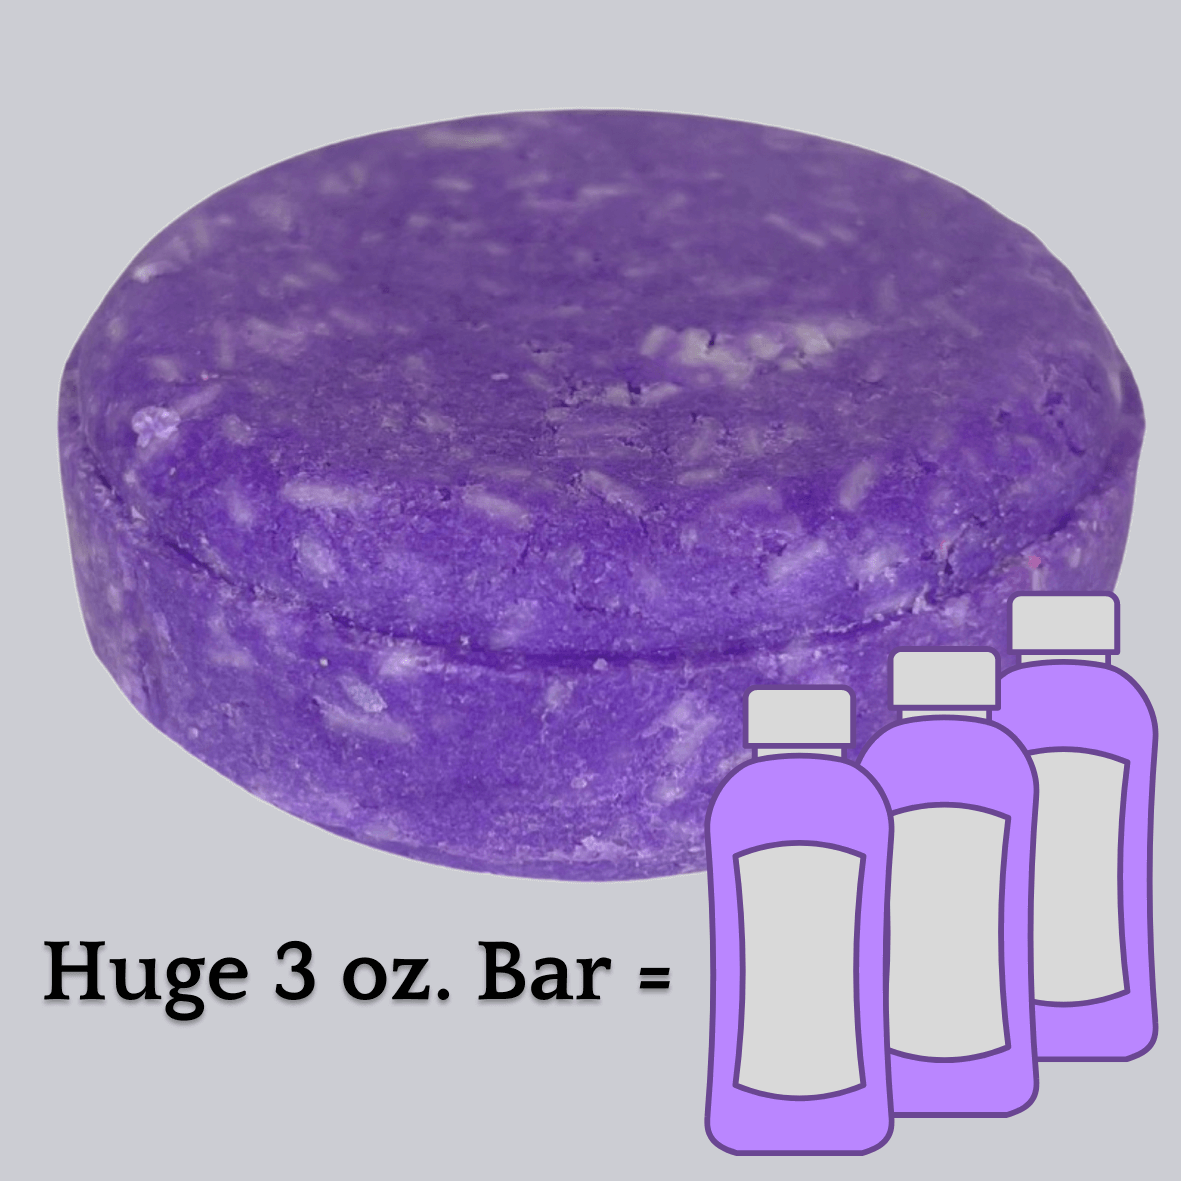 Purple Lavender shampoo bar with text below: 